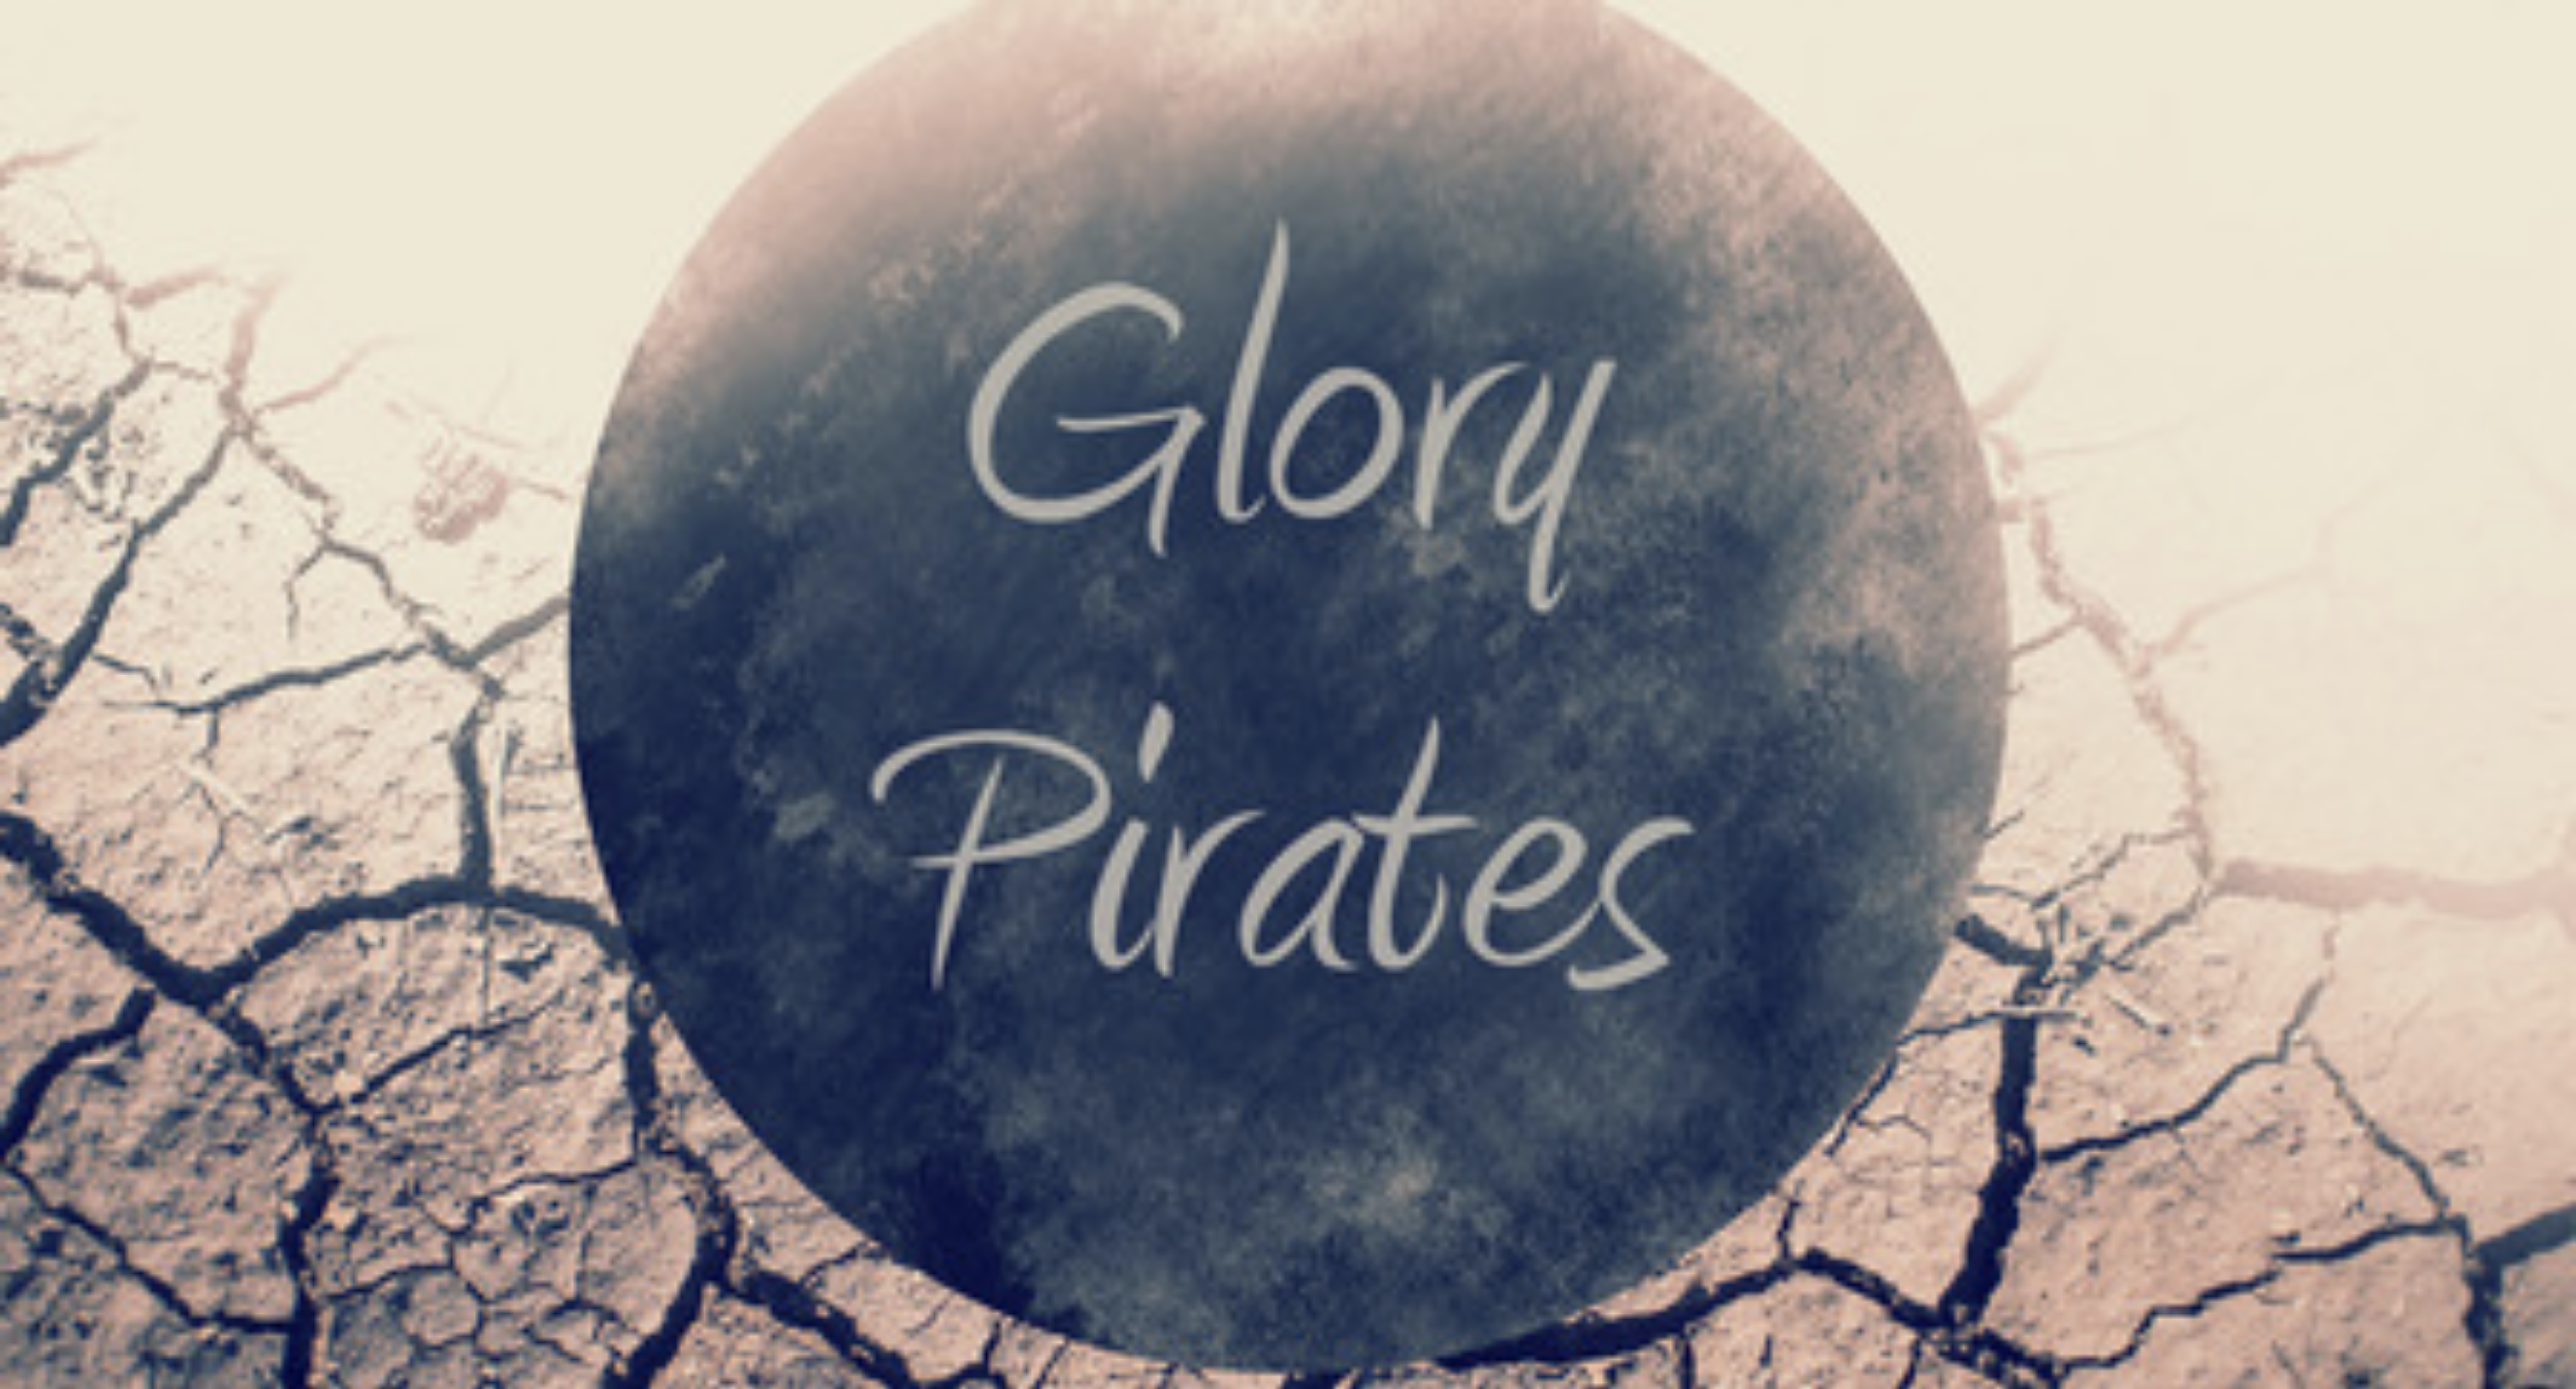 Glory Pirates Pt. 3